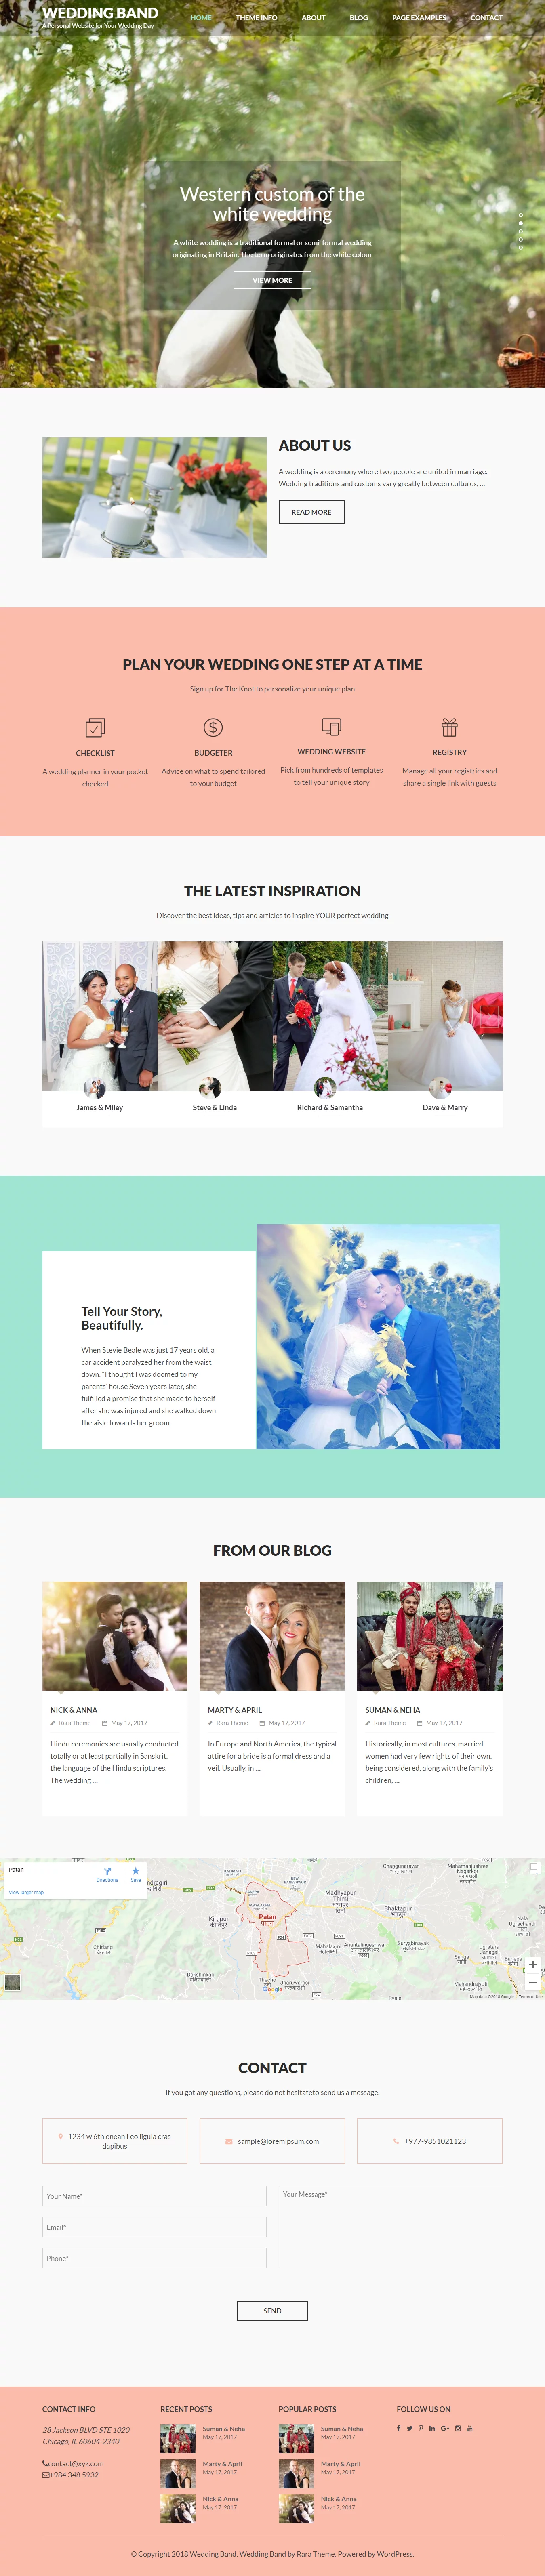 Wedding Band - Best Free Wedding WordPress Theme